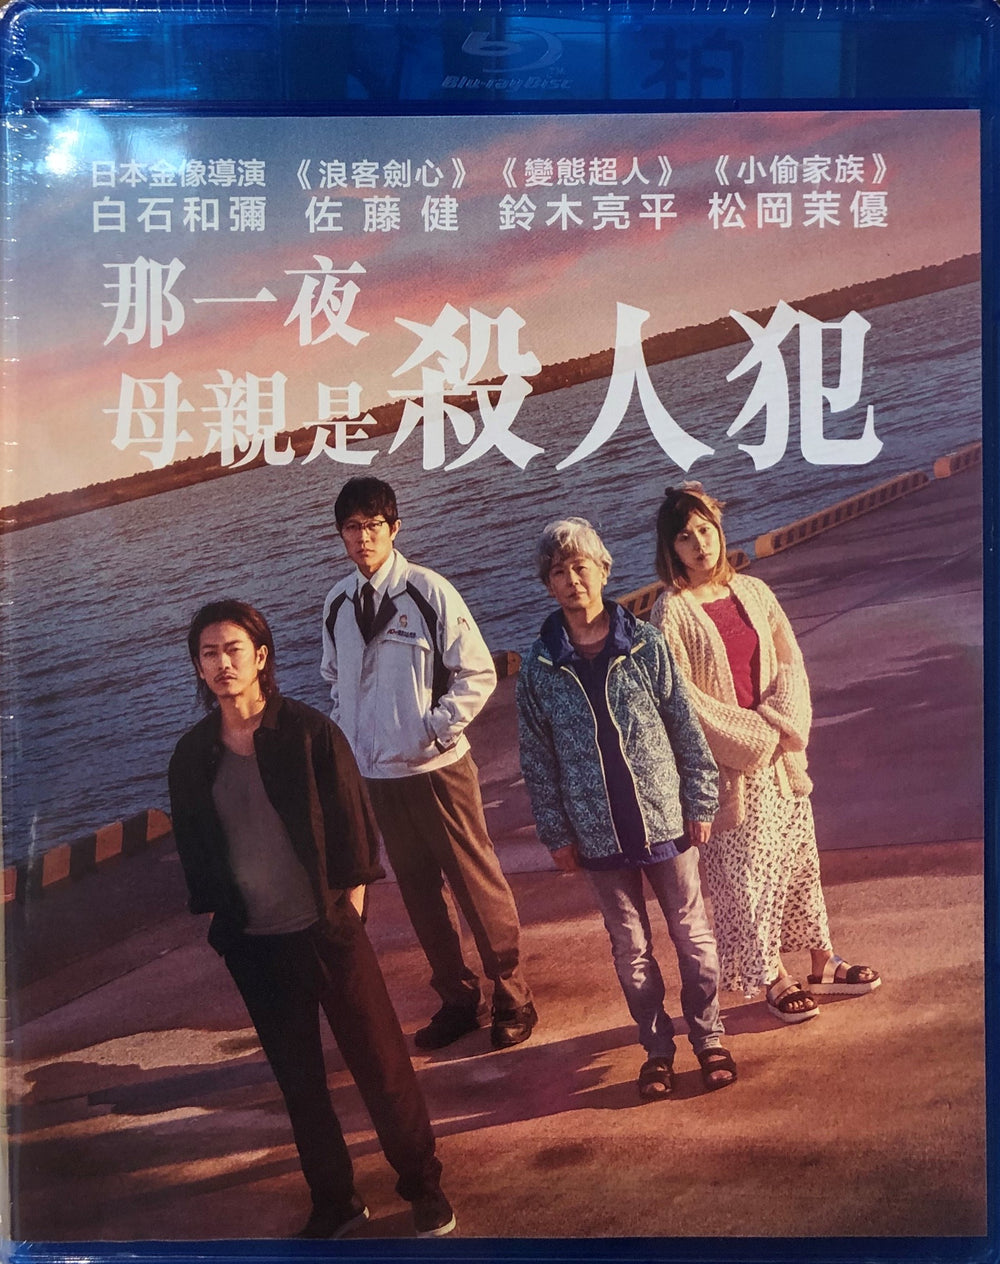 One Night 那一夜: 母親是殺人犯 2019  (Japanese Movie) BLU-RAY with English Subtitles (Region A)